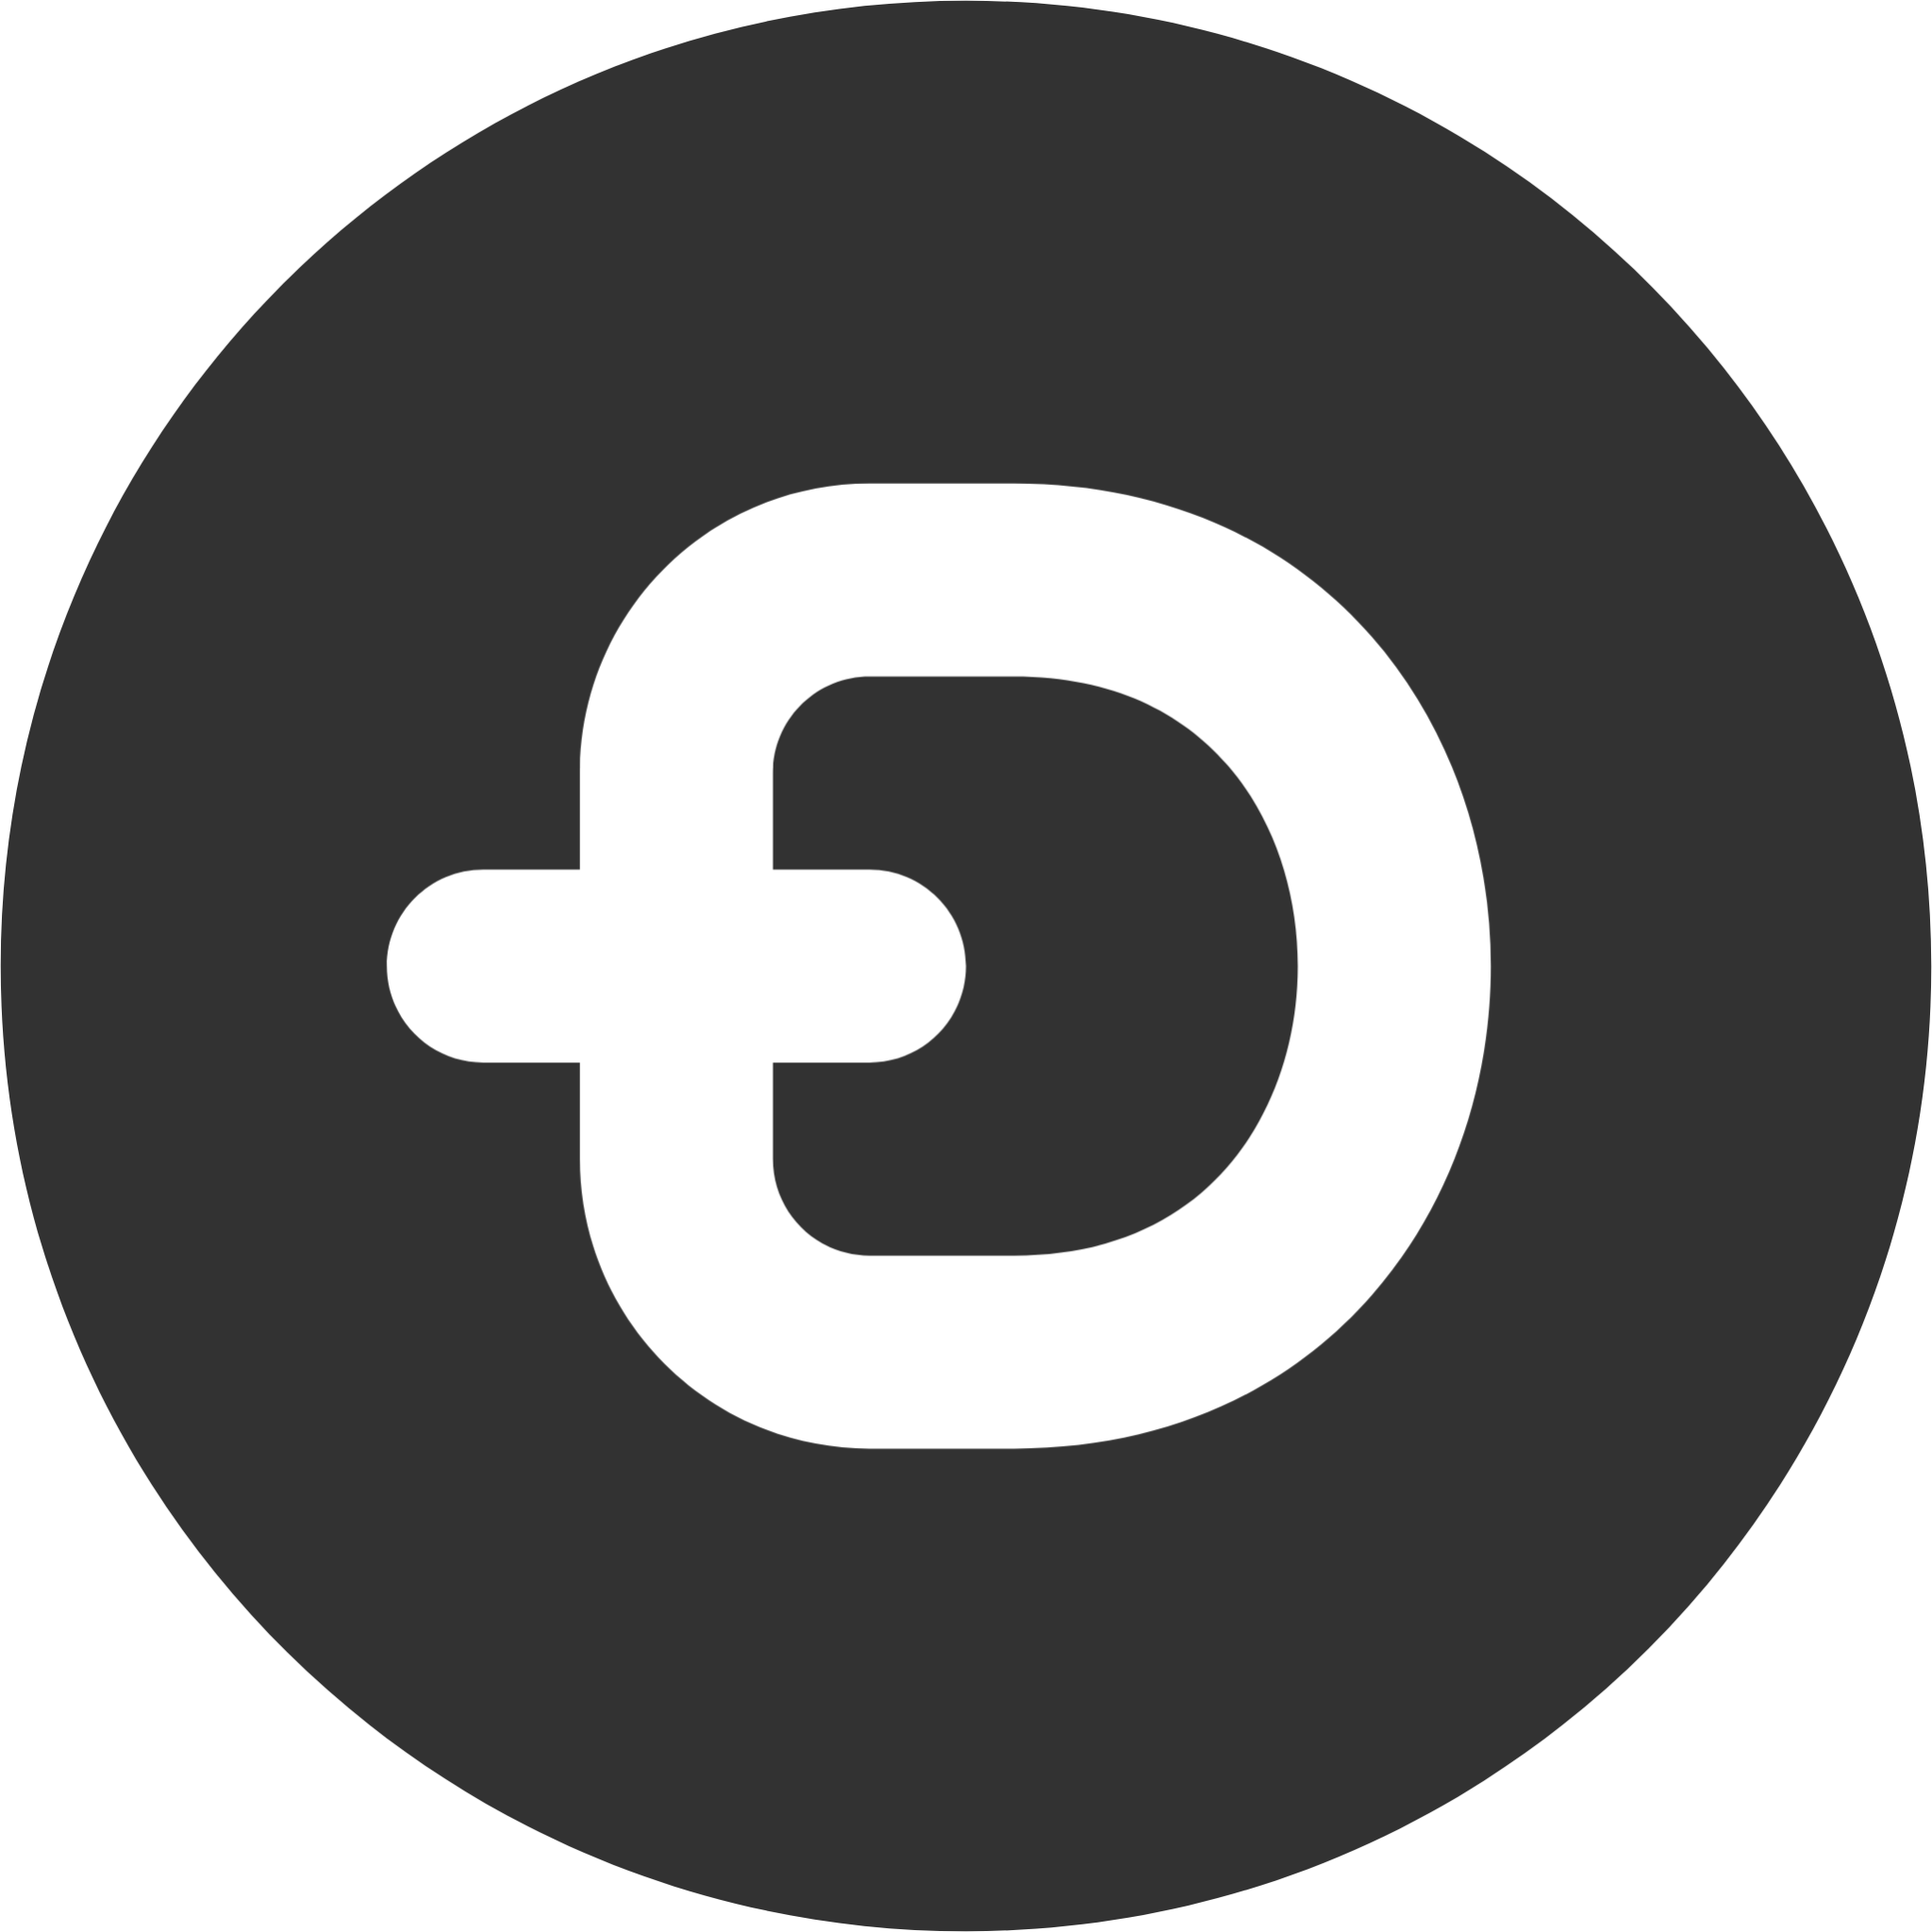 doge circle icon